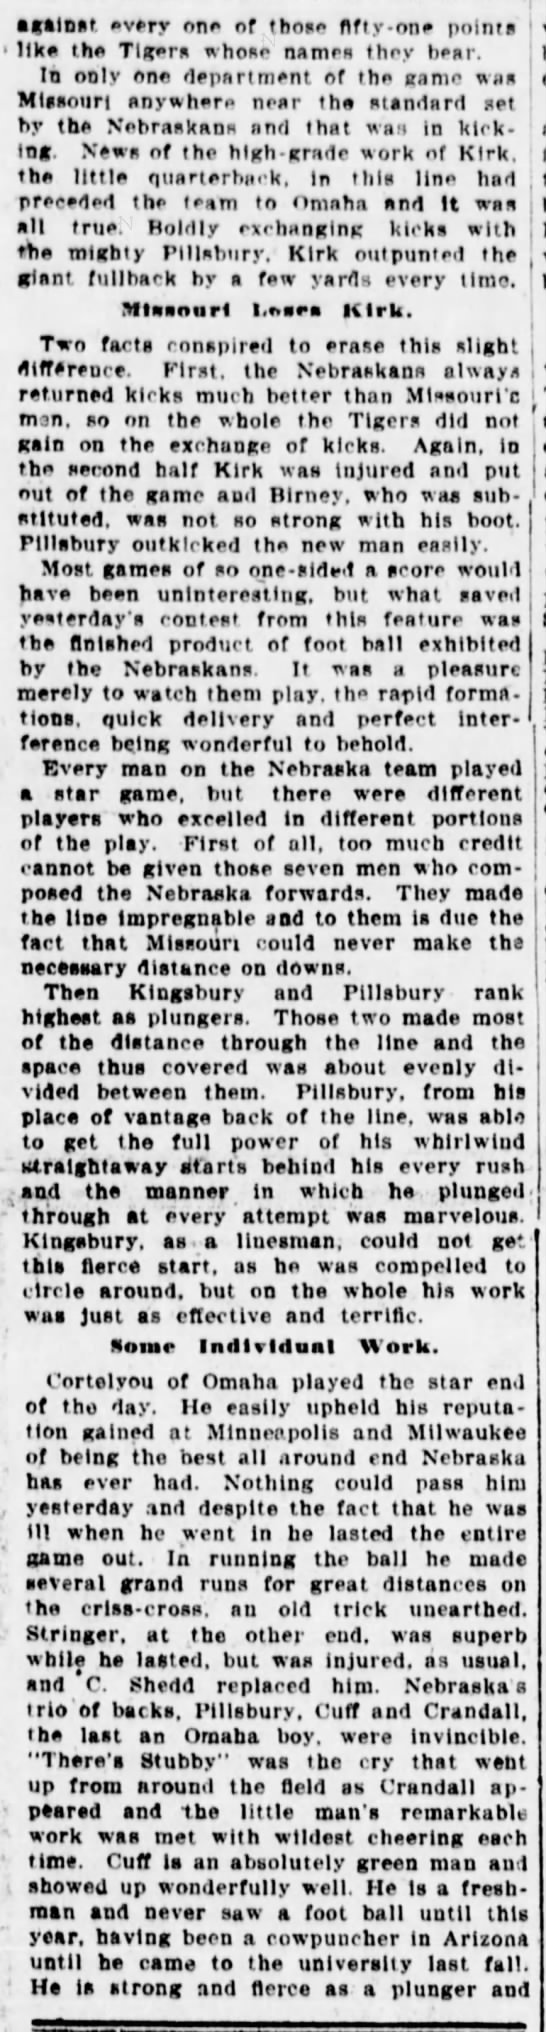 1901 Nebraska-Missouri football, part 2 - 